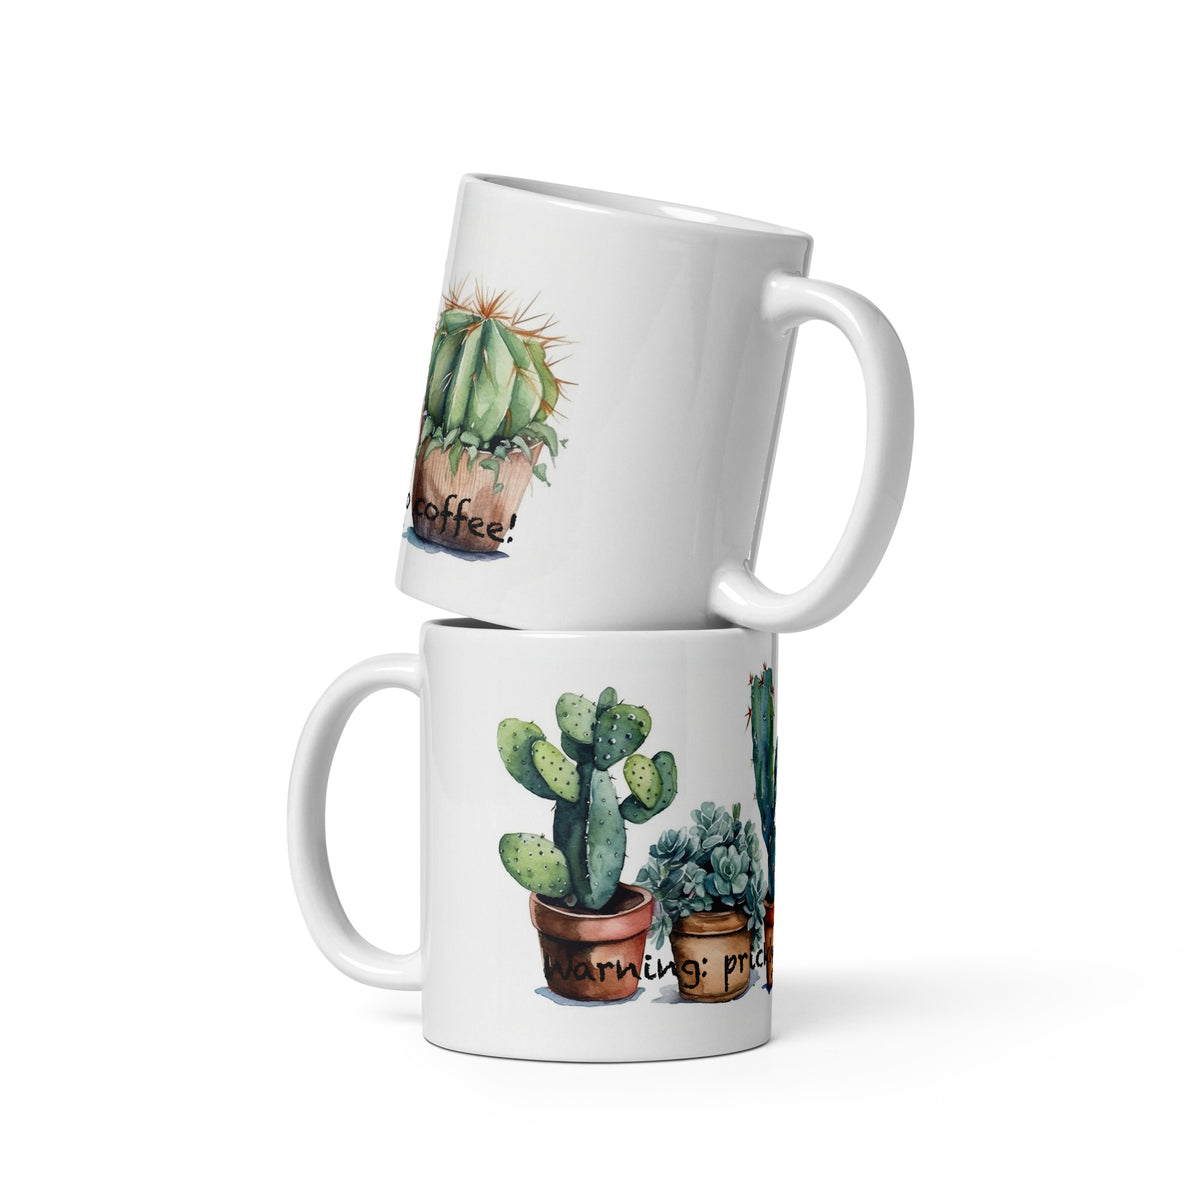 Prickly Coffee Mug